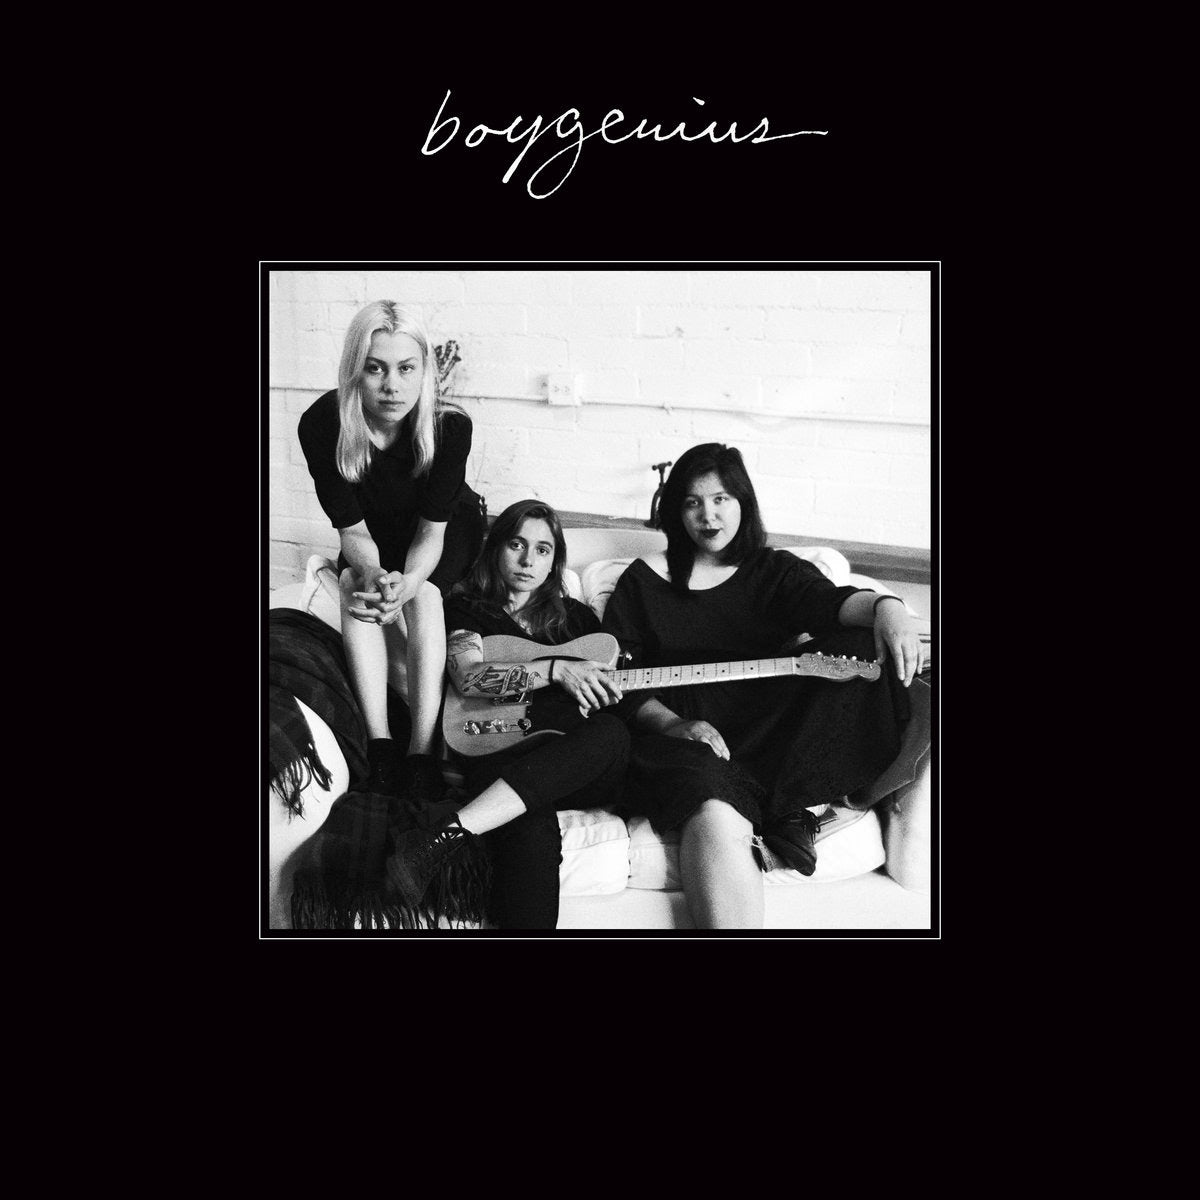 Boygenius - Boygenius 12" | Buy the Vinyl EP from Flying Nun Records 